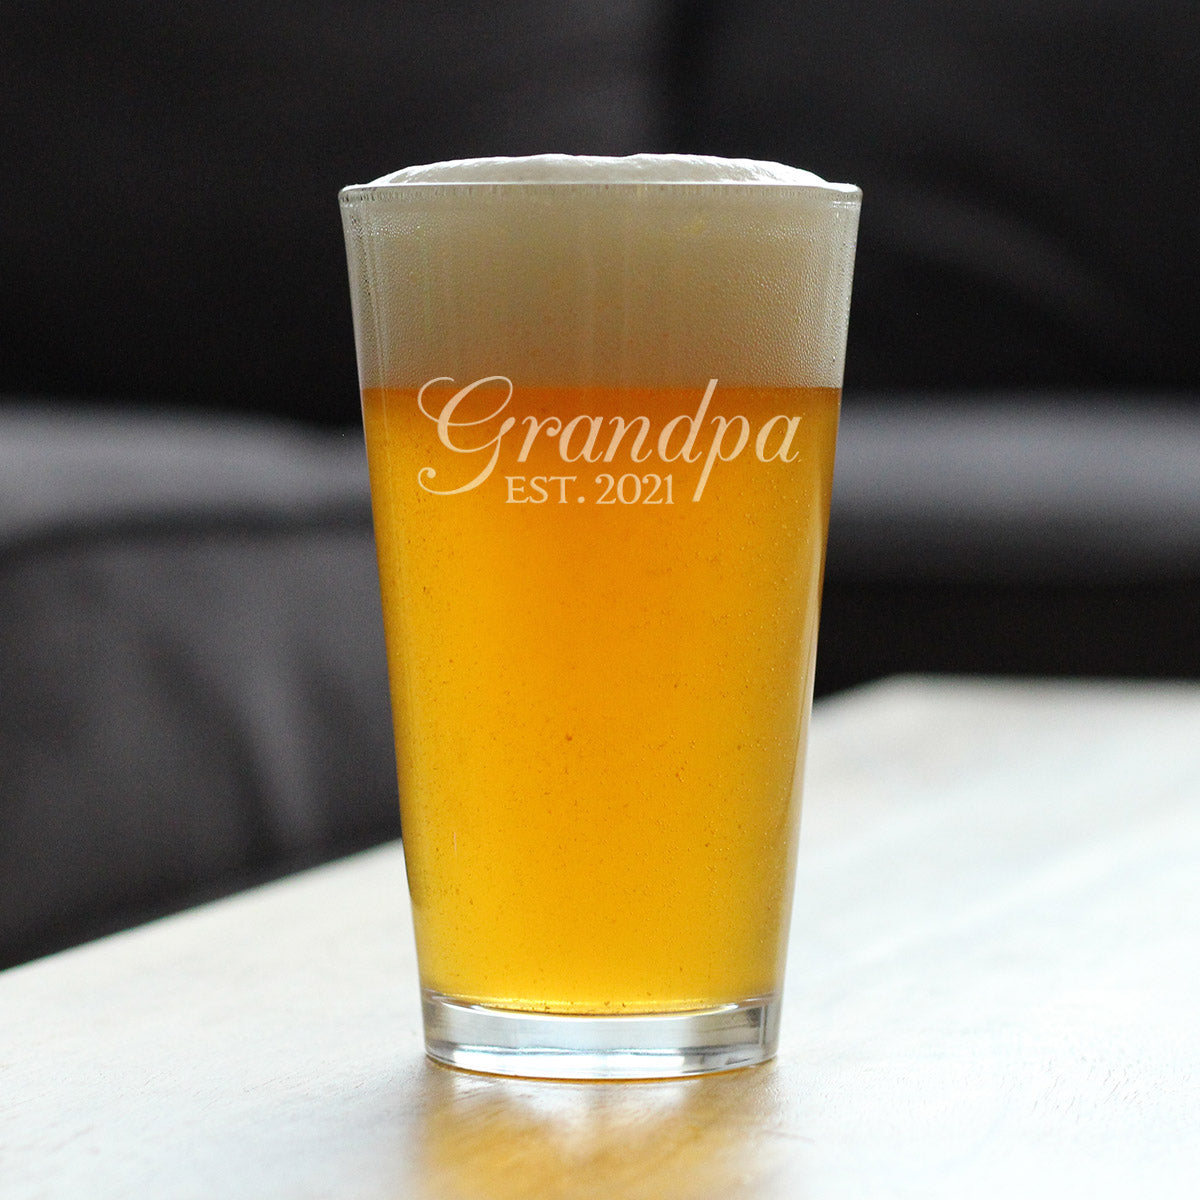 Grandpa Est 2021 - New Grandfather Pint Glass Gift for First Time Grandparents - Decorative 16 Oz Glasses